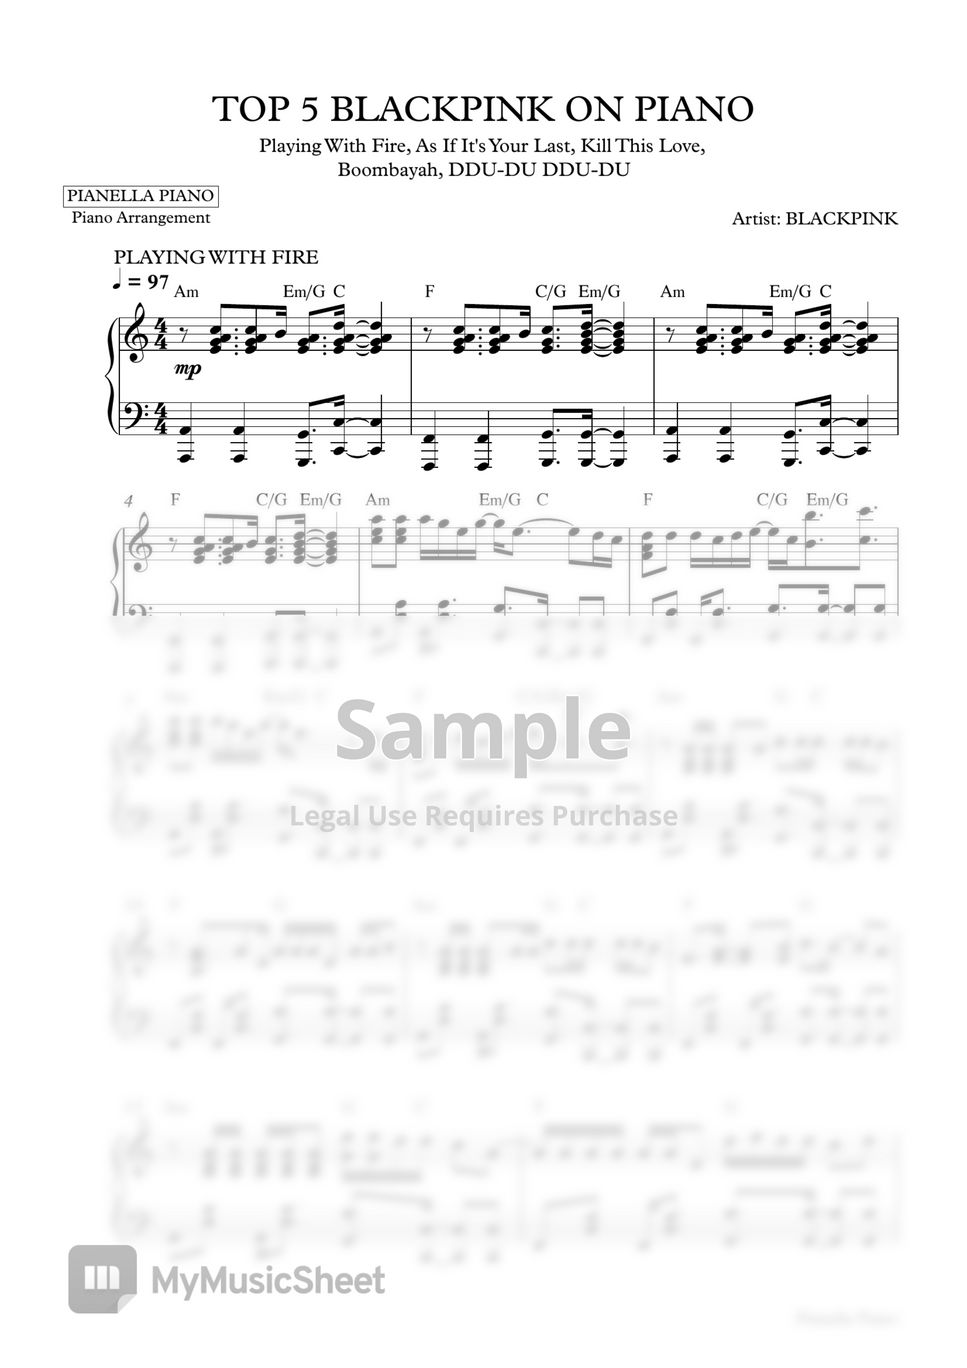 BLACKPINK - TOP 5 BLACKPINK ON PIANO (Piano Sheet) by Pianella Piano